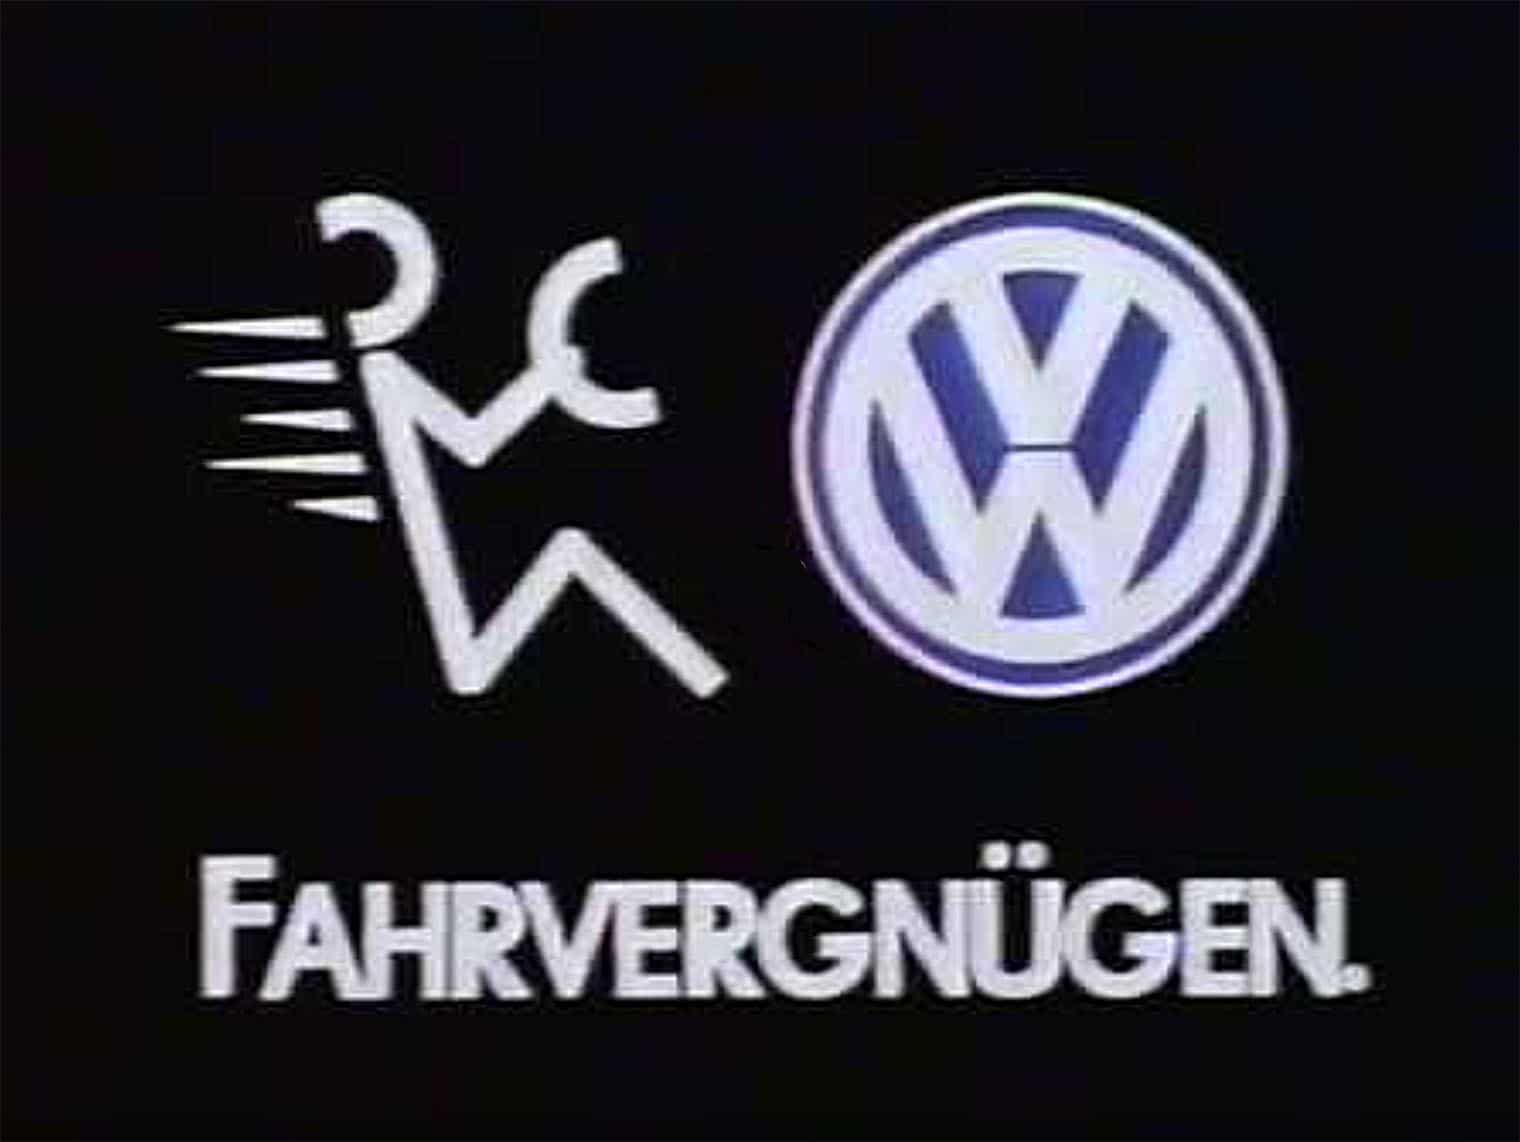 Don’t expect to hear the old "Fahrvegnugen" audio when VW reveals...